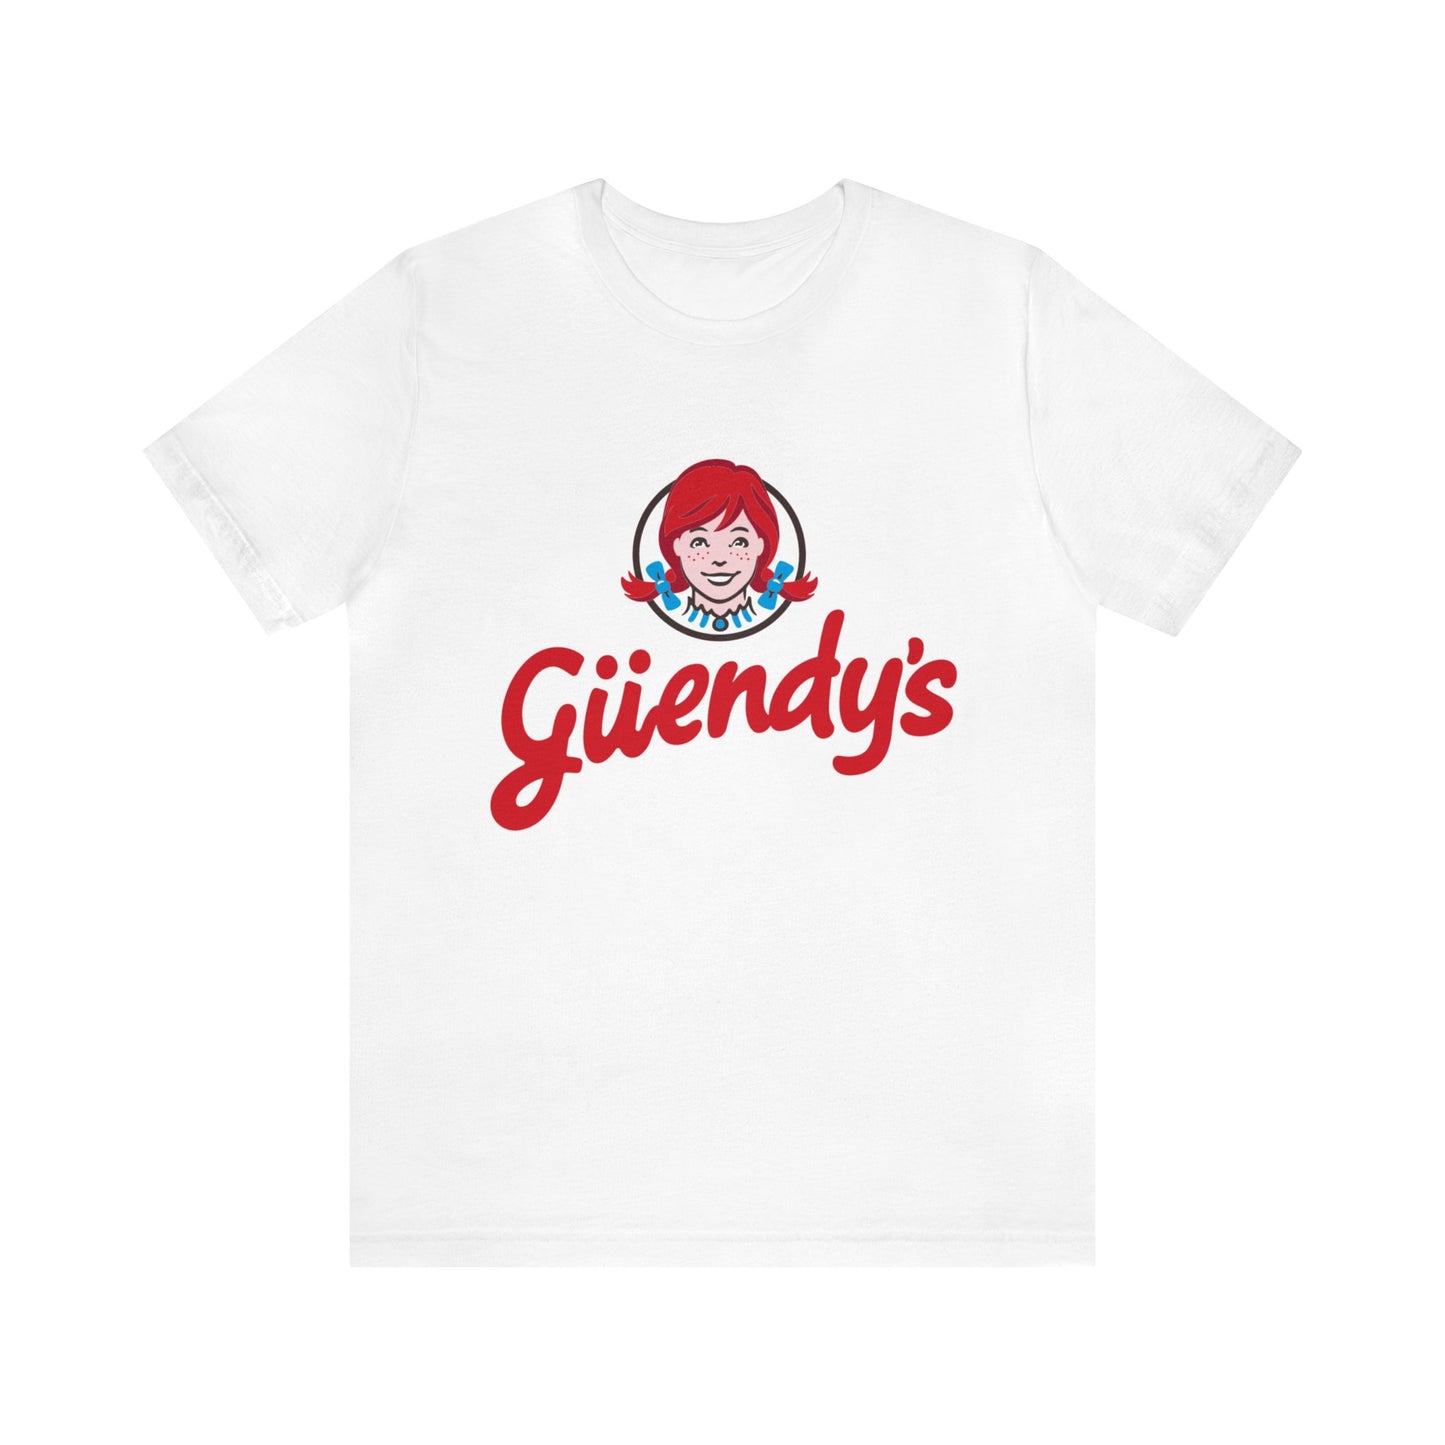 Guendy's T-Shirt - Wendy's Hispanic Logo Parody